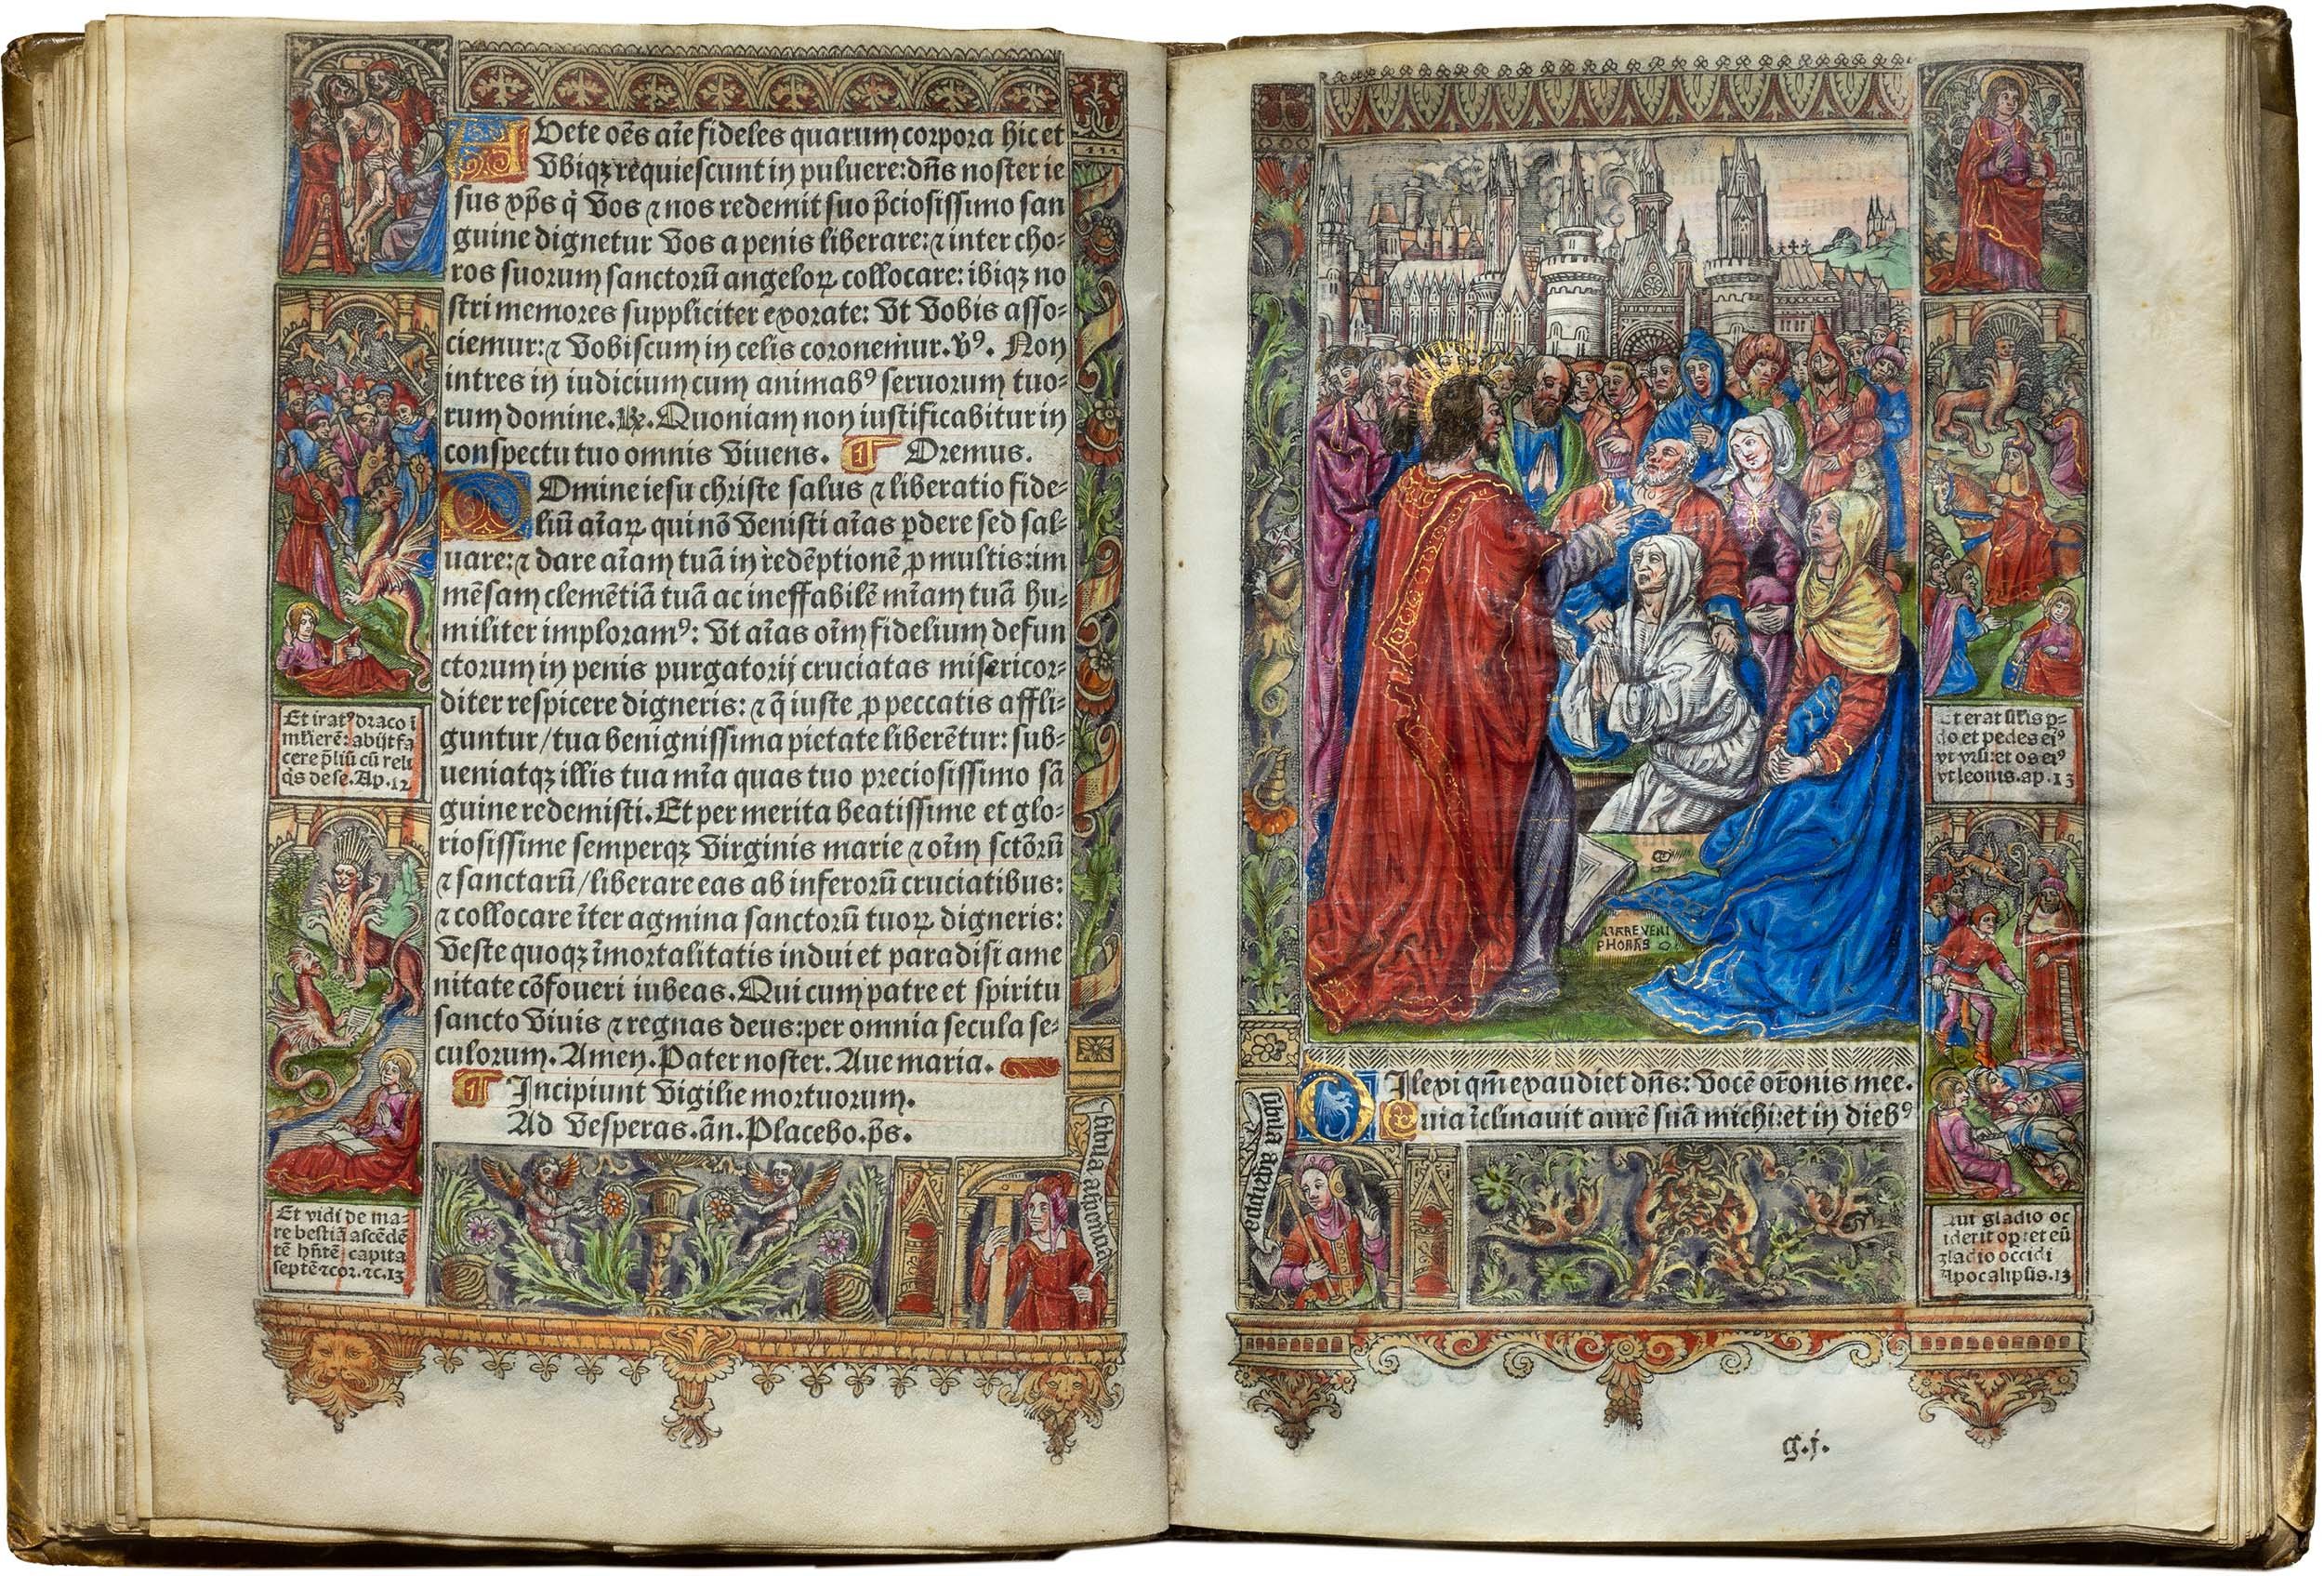 Horae-bmv-31-march-1511-kerver-printed-book-of-hours-illuminated-copy-vellum-52.jpg